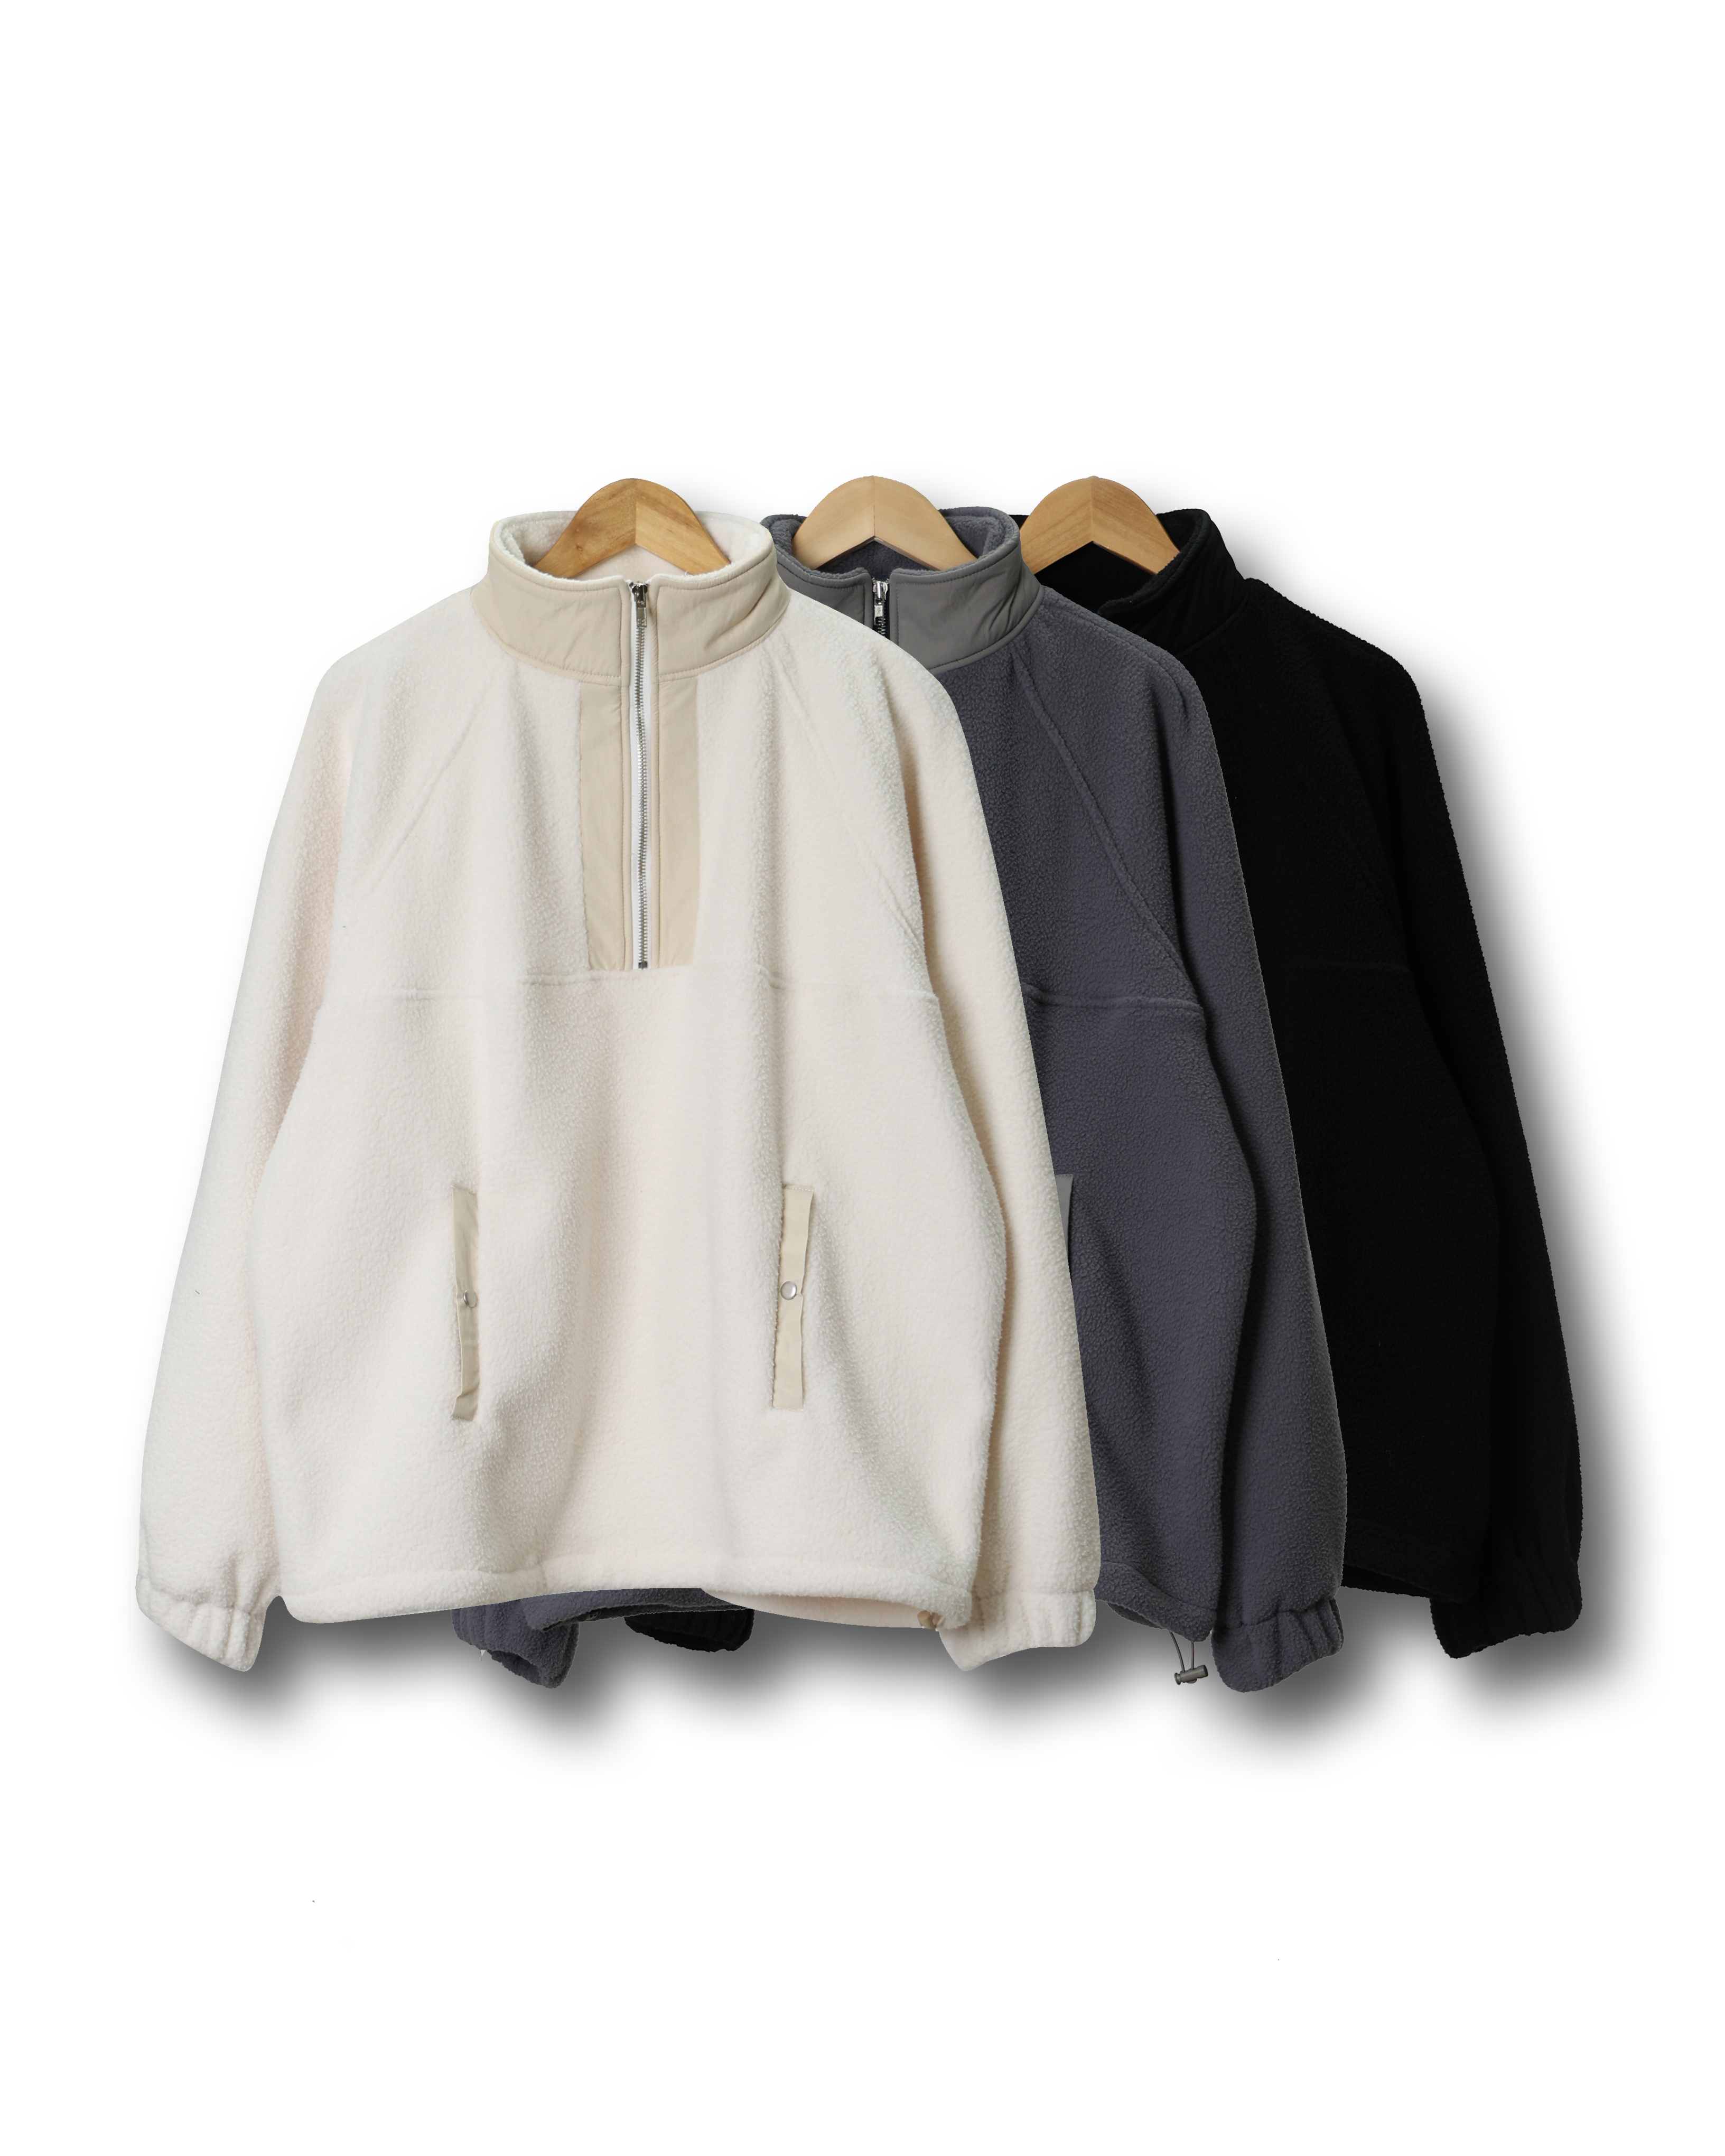 LIBERT Fleece Winter Pocket Anorak Jacket (Black/Gray/Ivory)